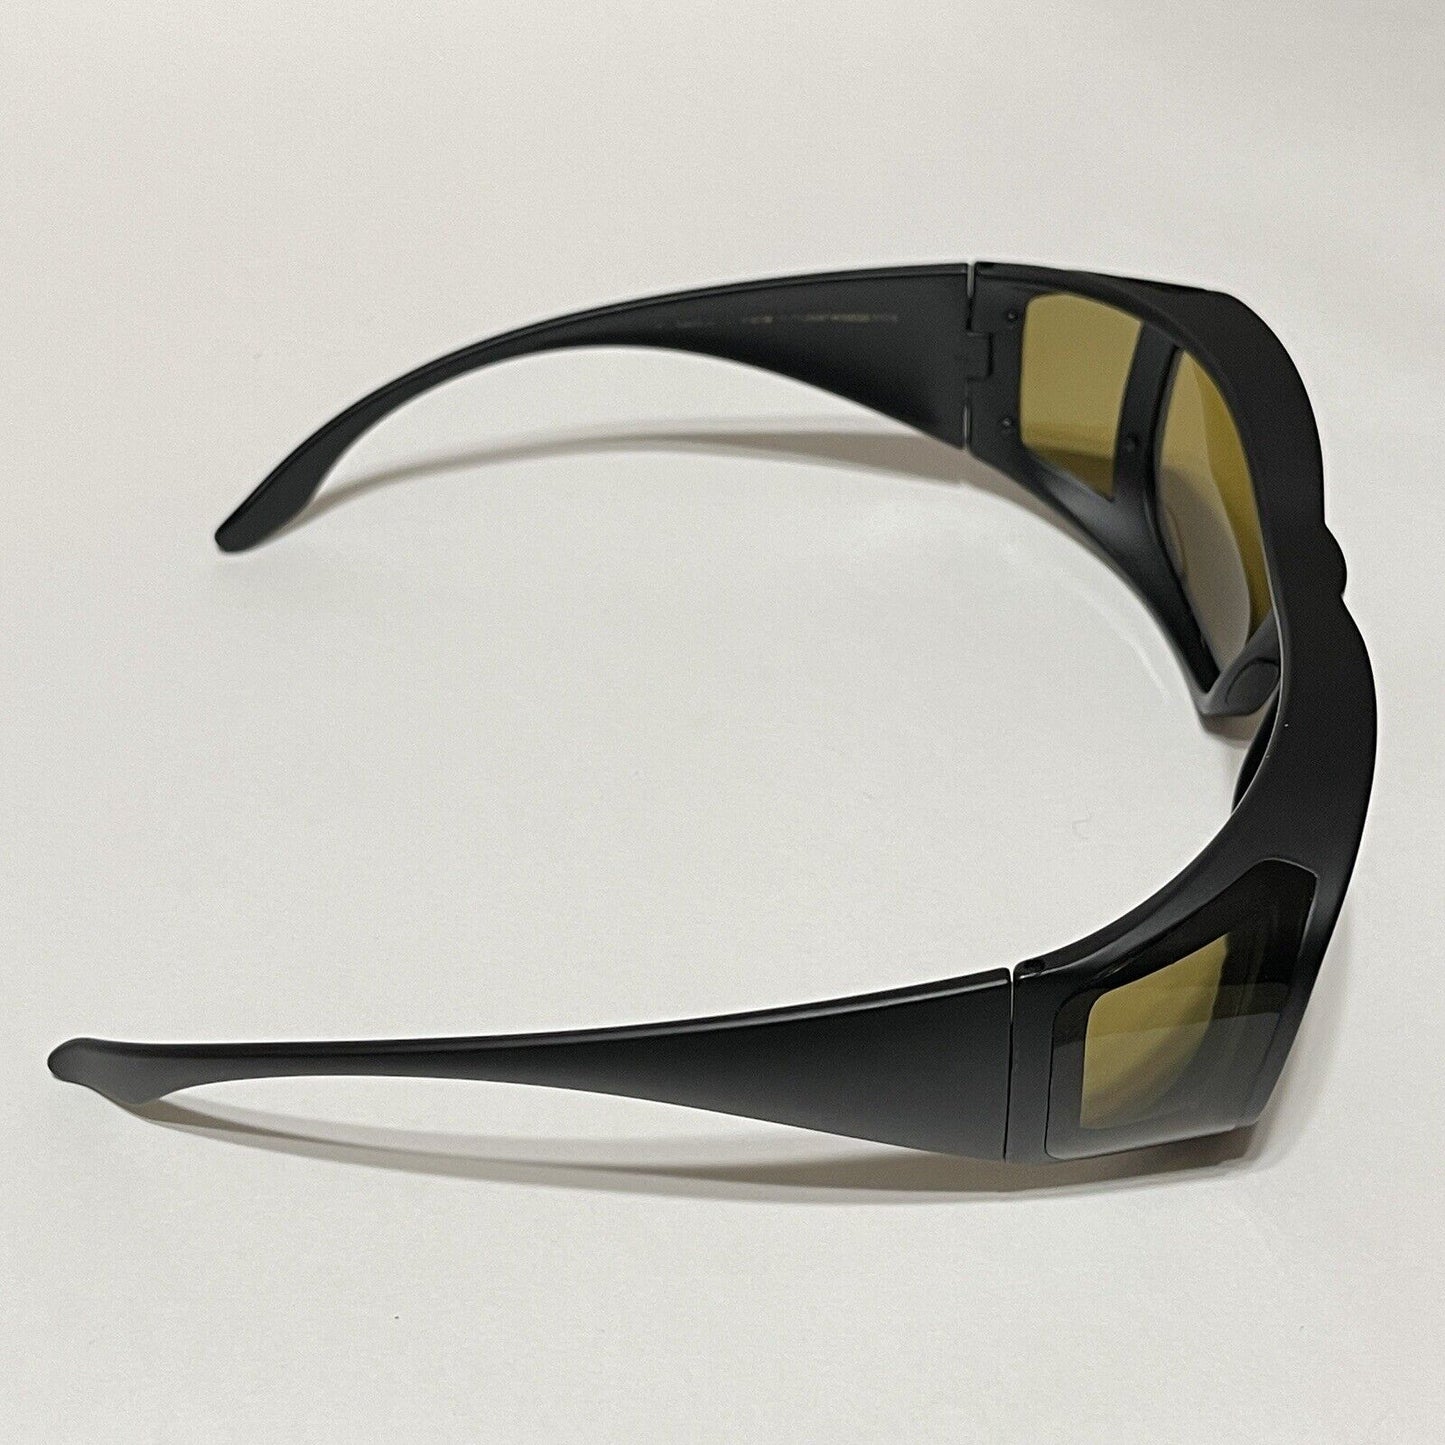 Eagle Eyes FITONS Wrap Around Sunglasses Black Yellow Lens #10035